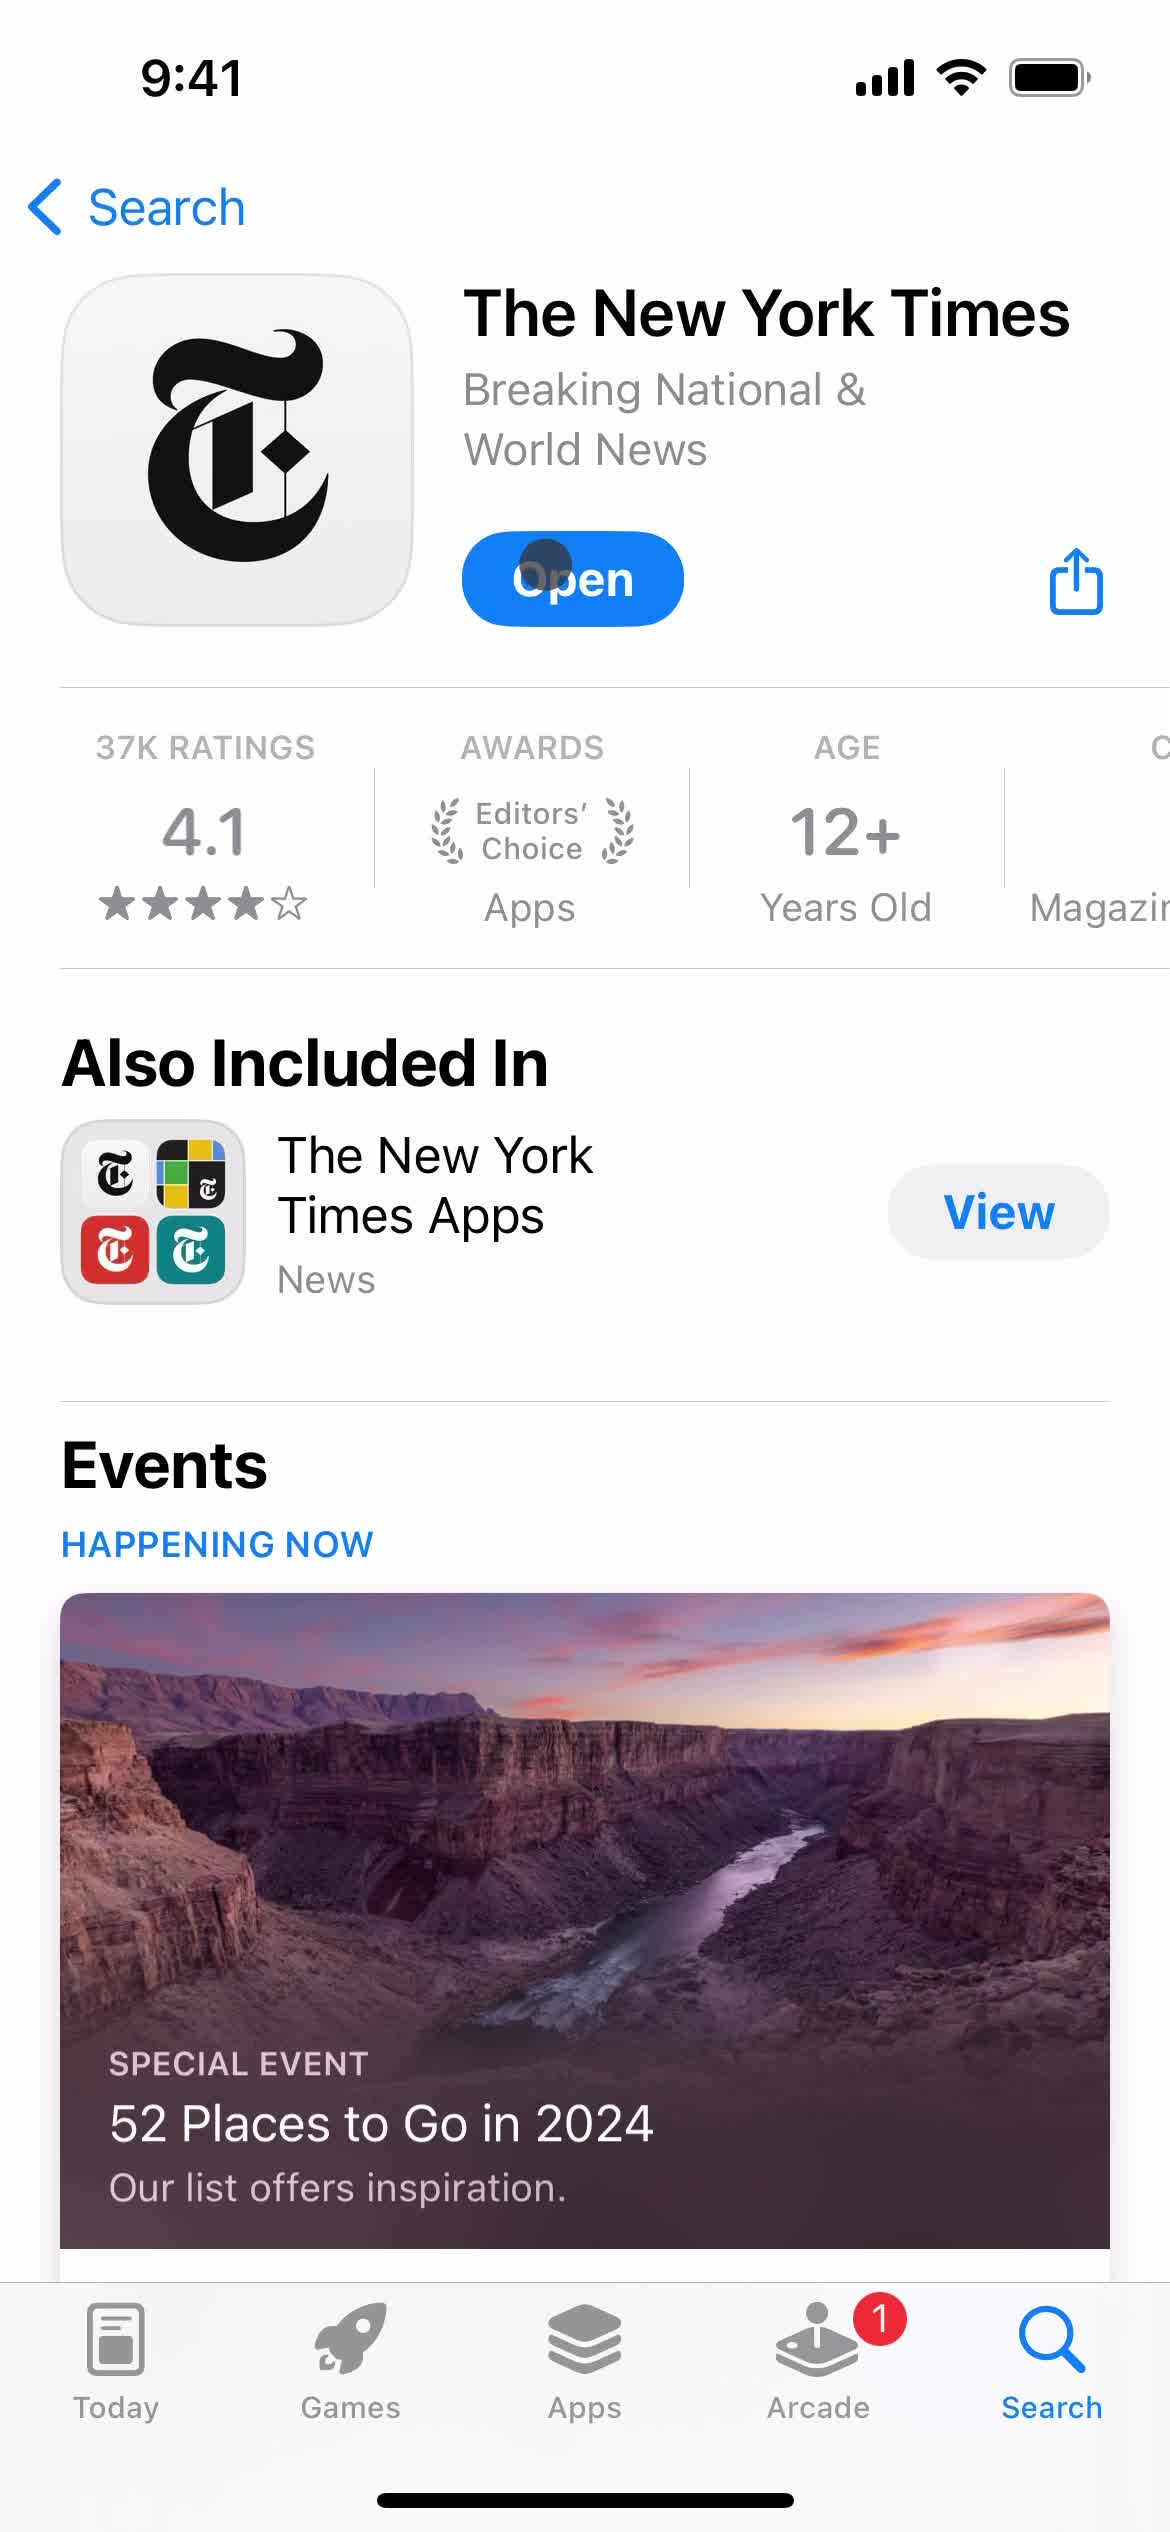 The New York Times app store listing screenshot